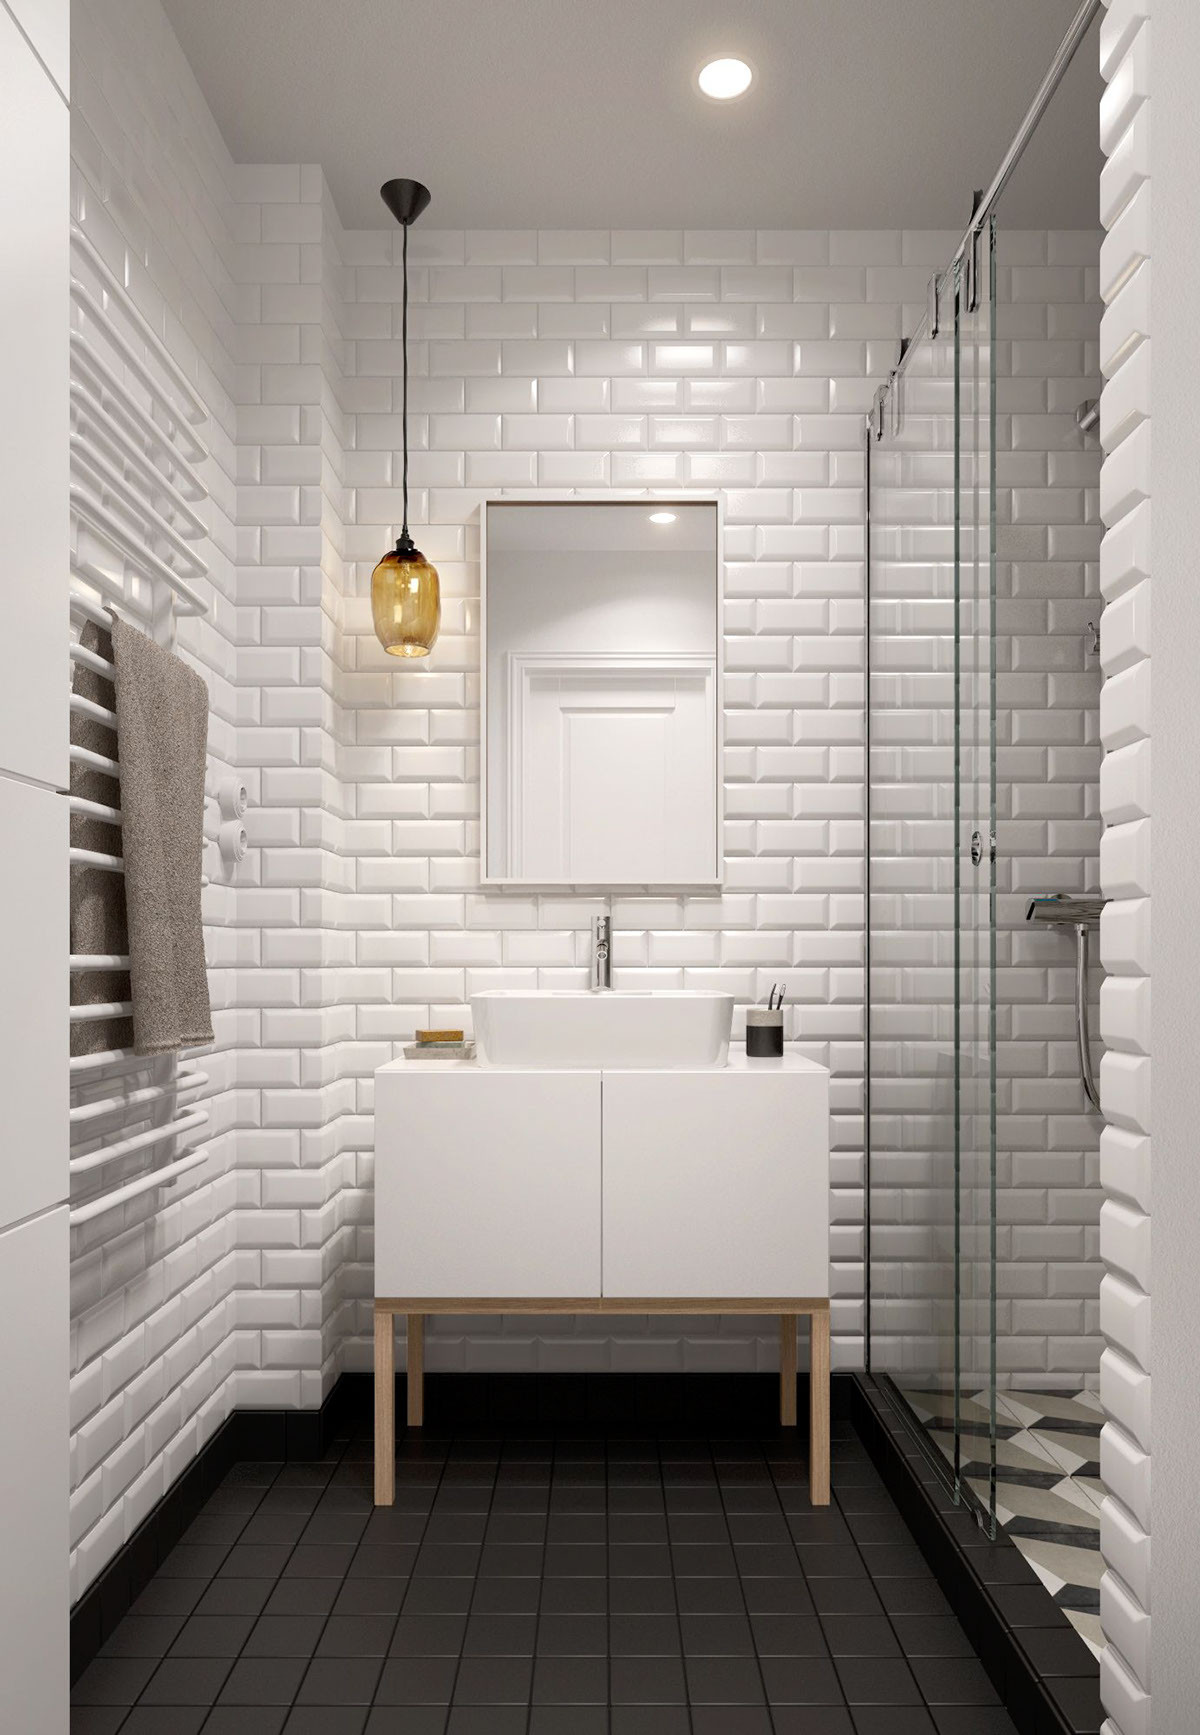 Bathroom Tiles Design Images
 A Midcentury Inspired Apartment with Scandinavian Tendencies